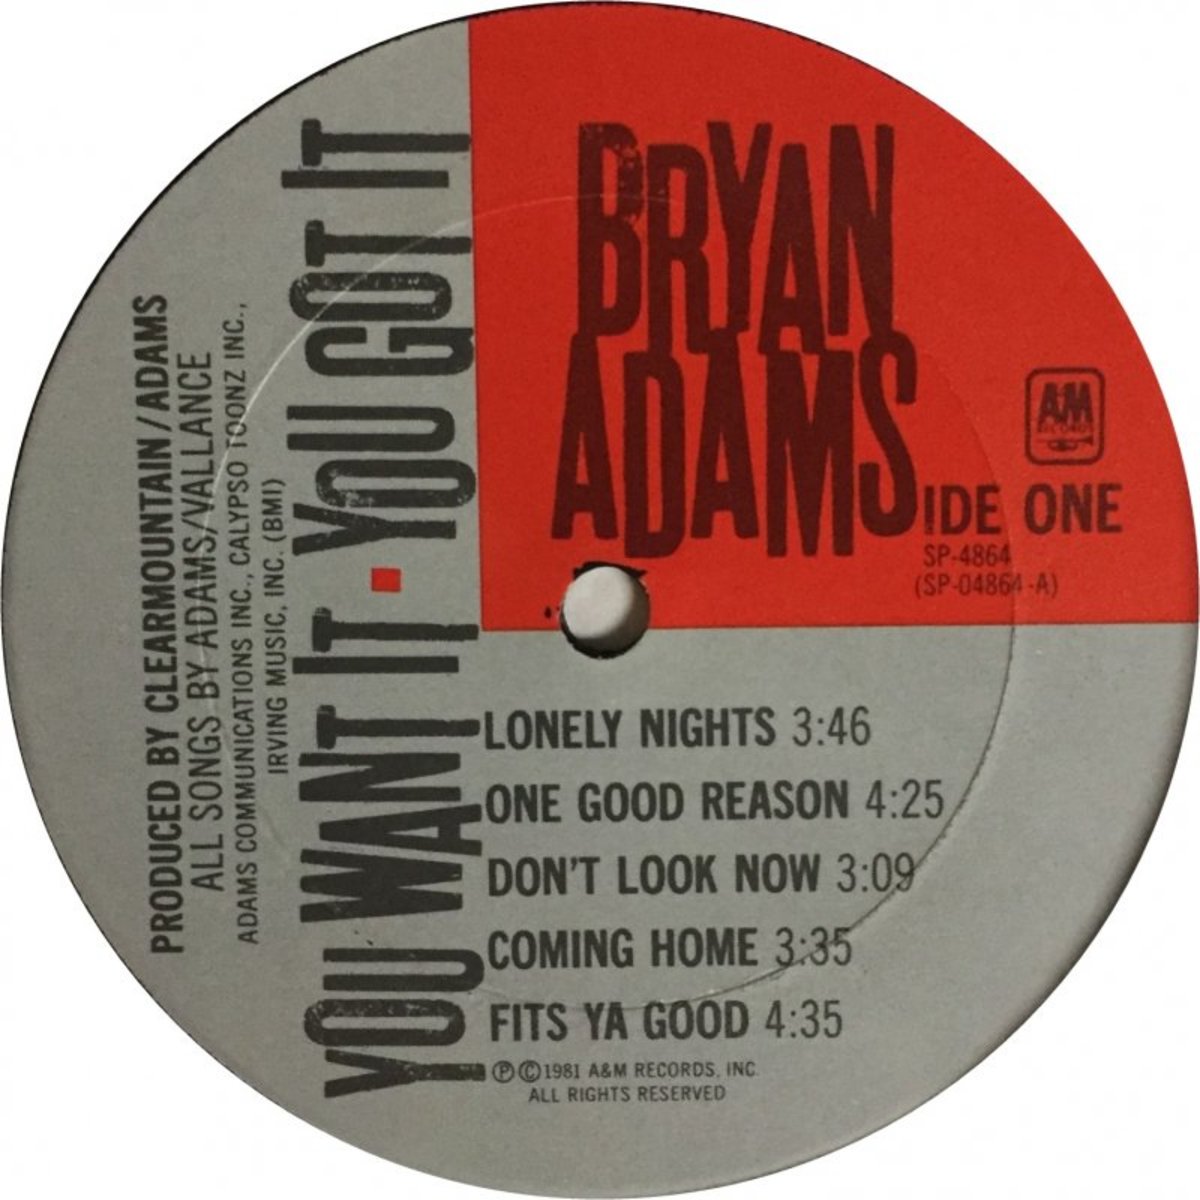 bryan-adams-sp4864-ab